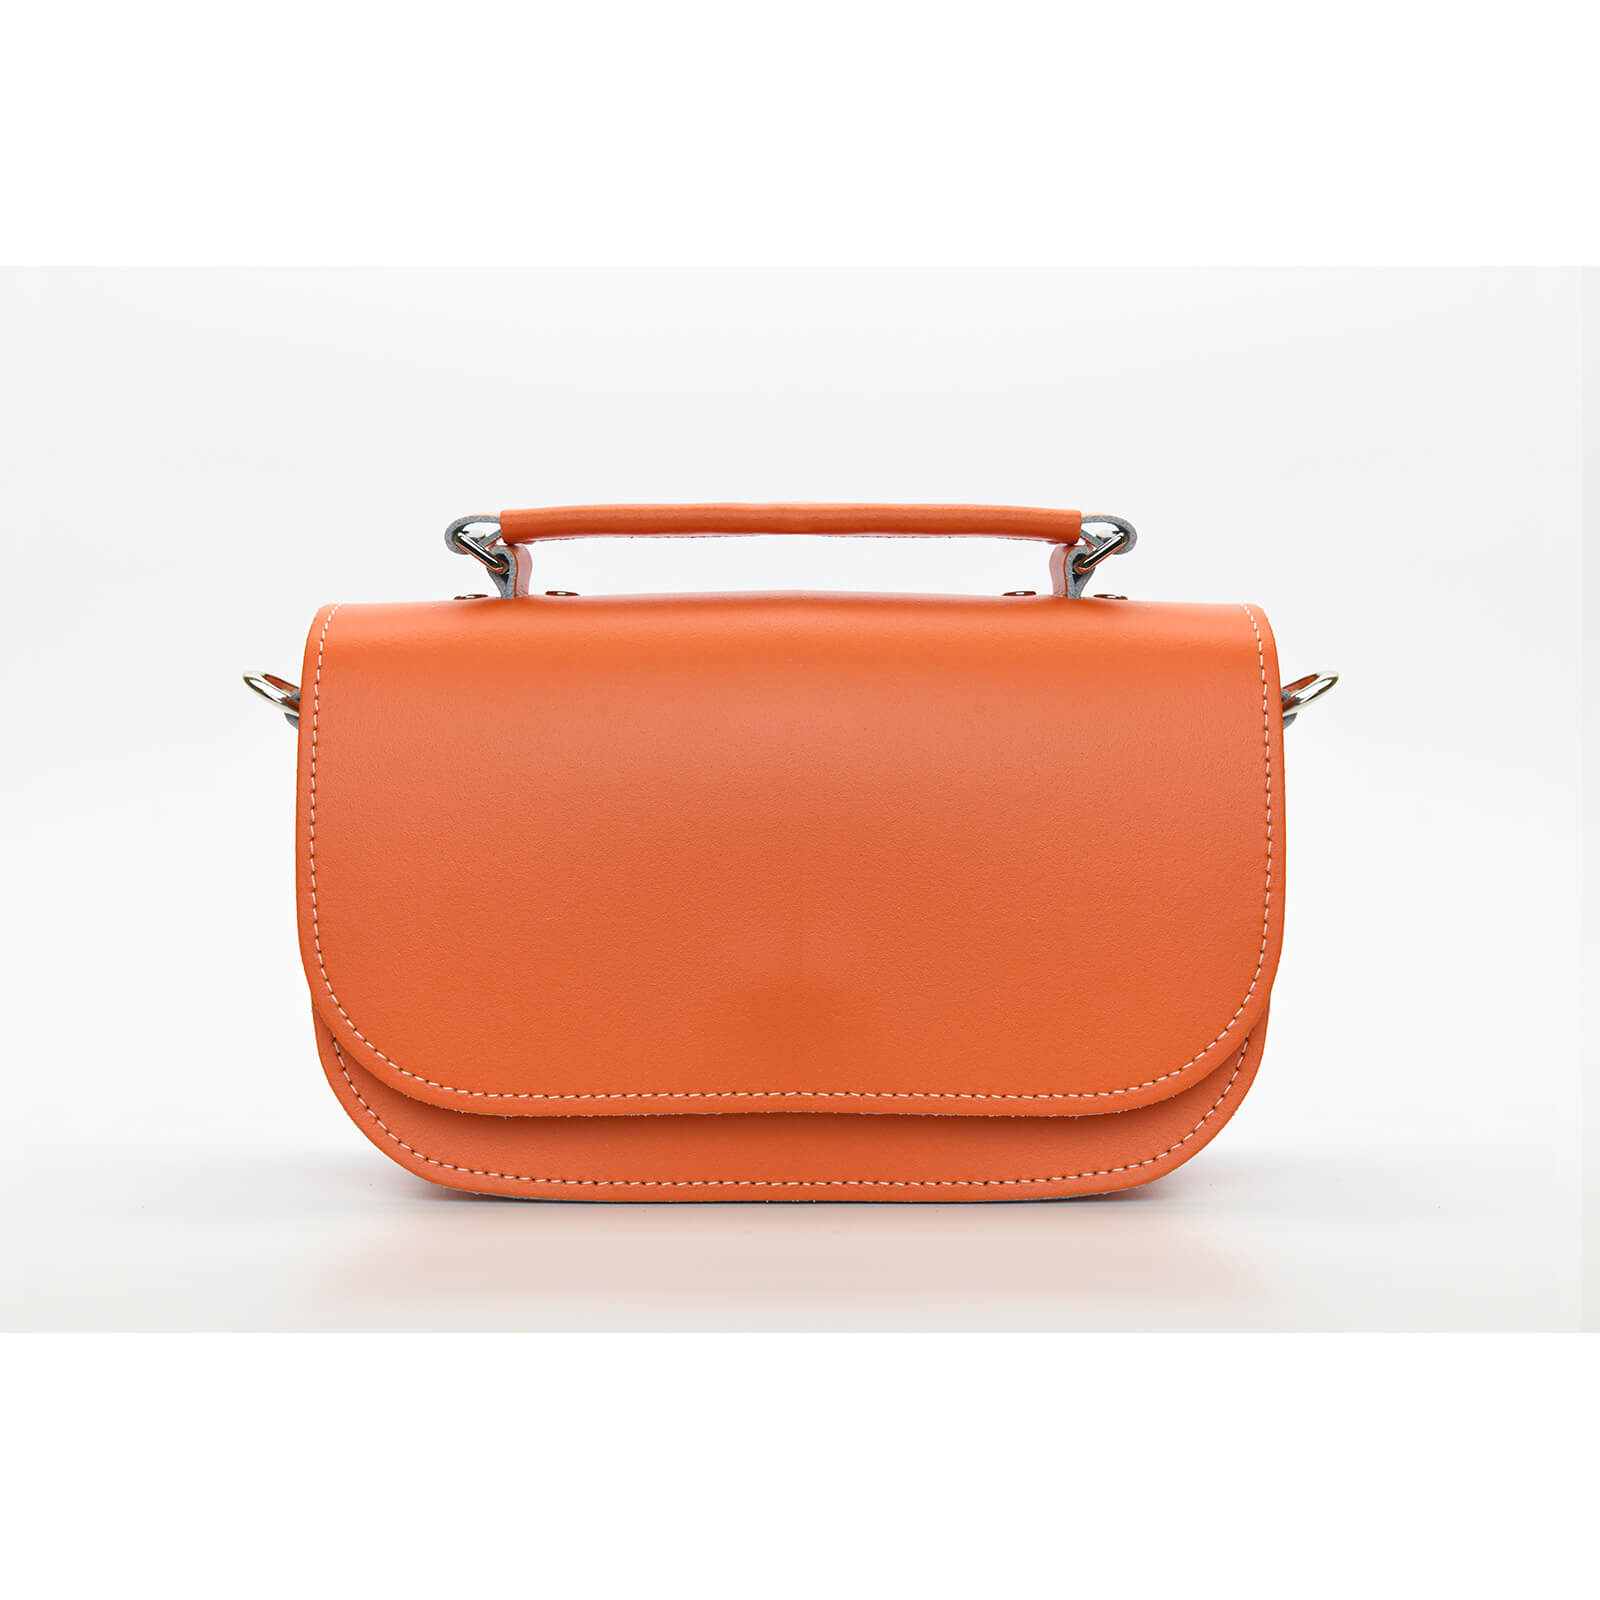 Zatchels Aura Handmade Leather Handbag - Orange